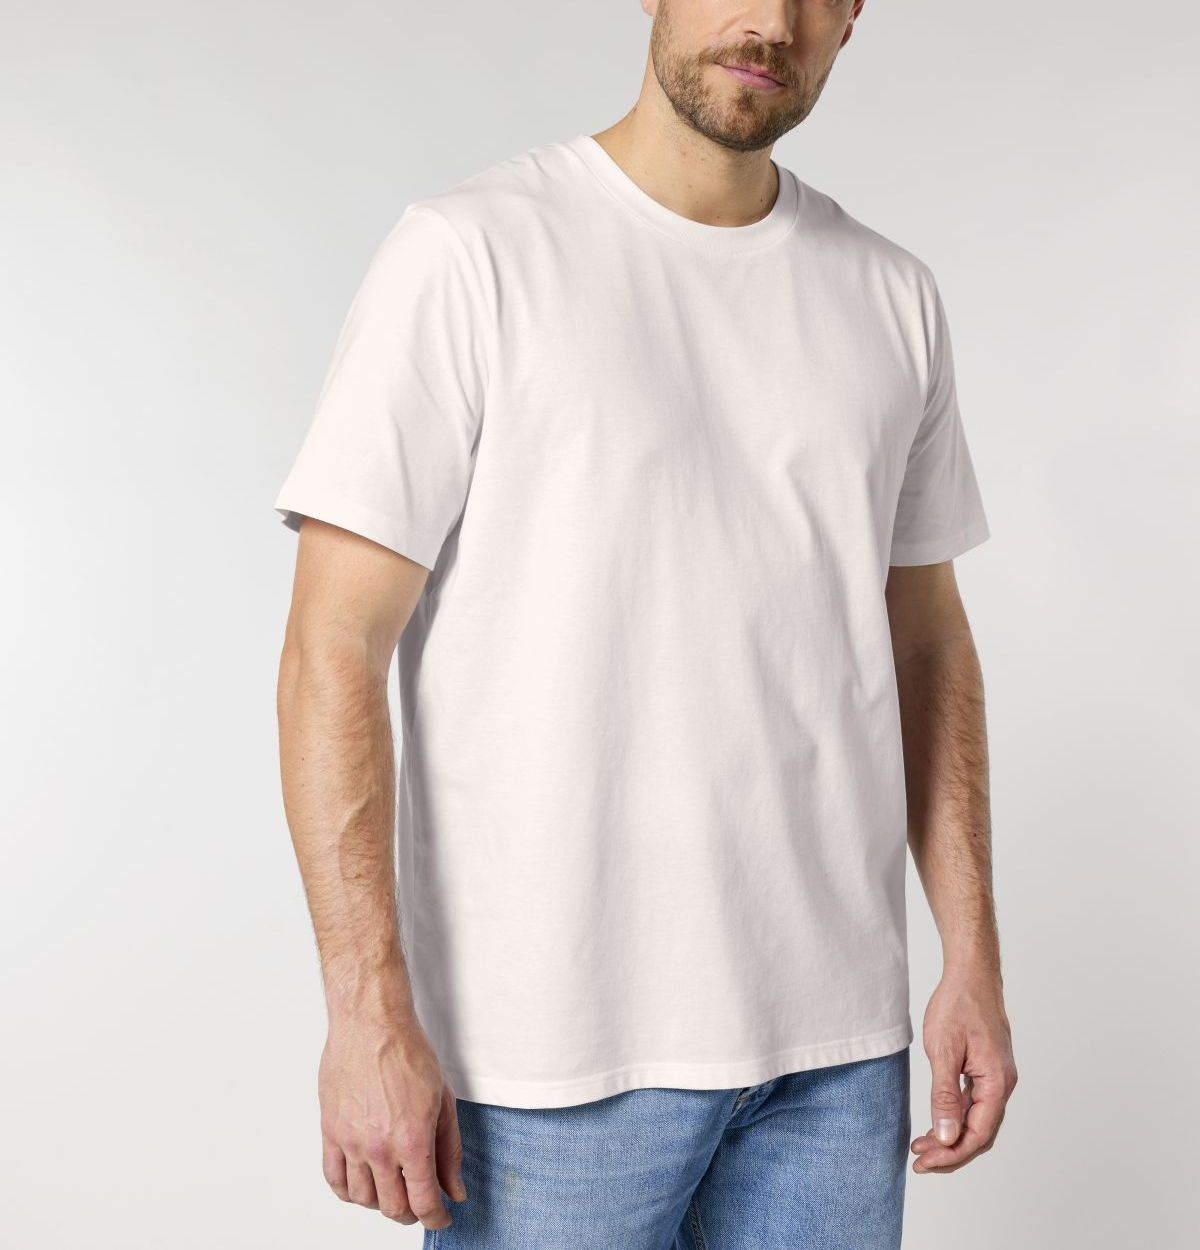 Basic T-Shirt Modell: Creative von Unipolar